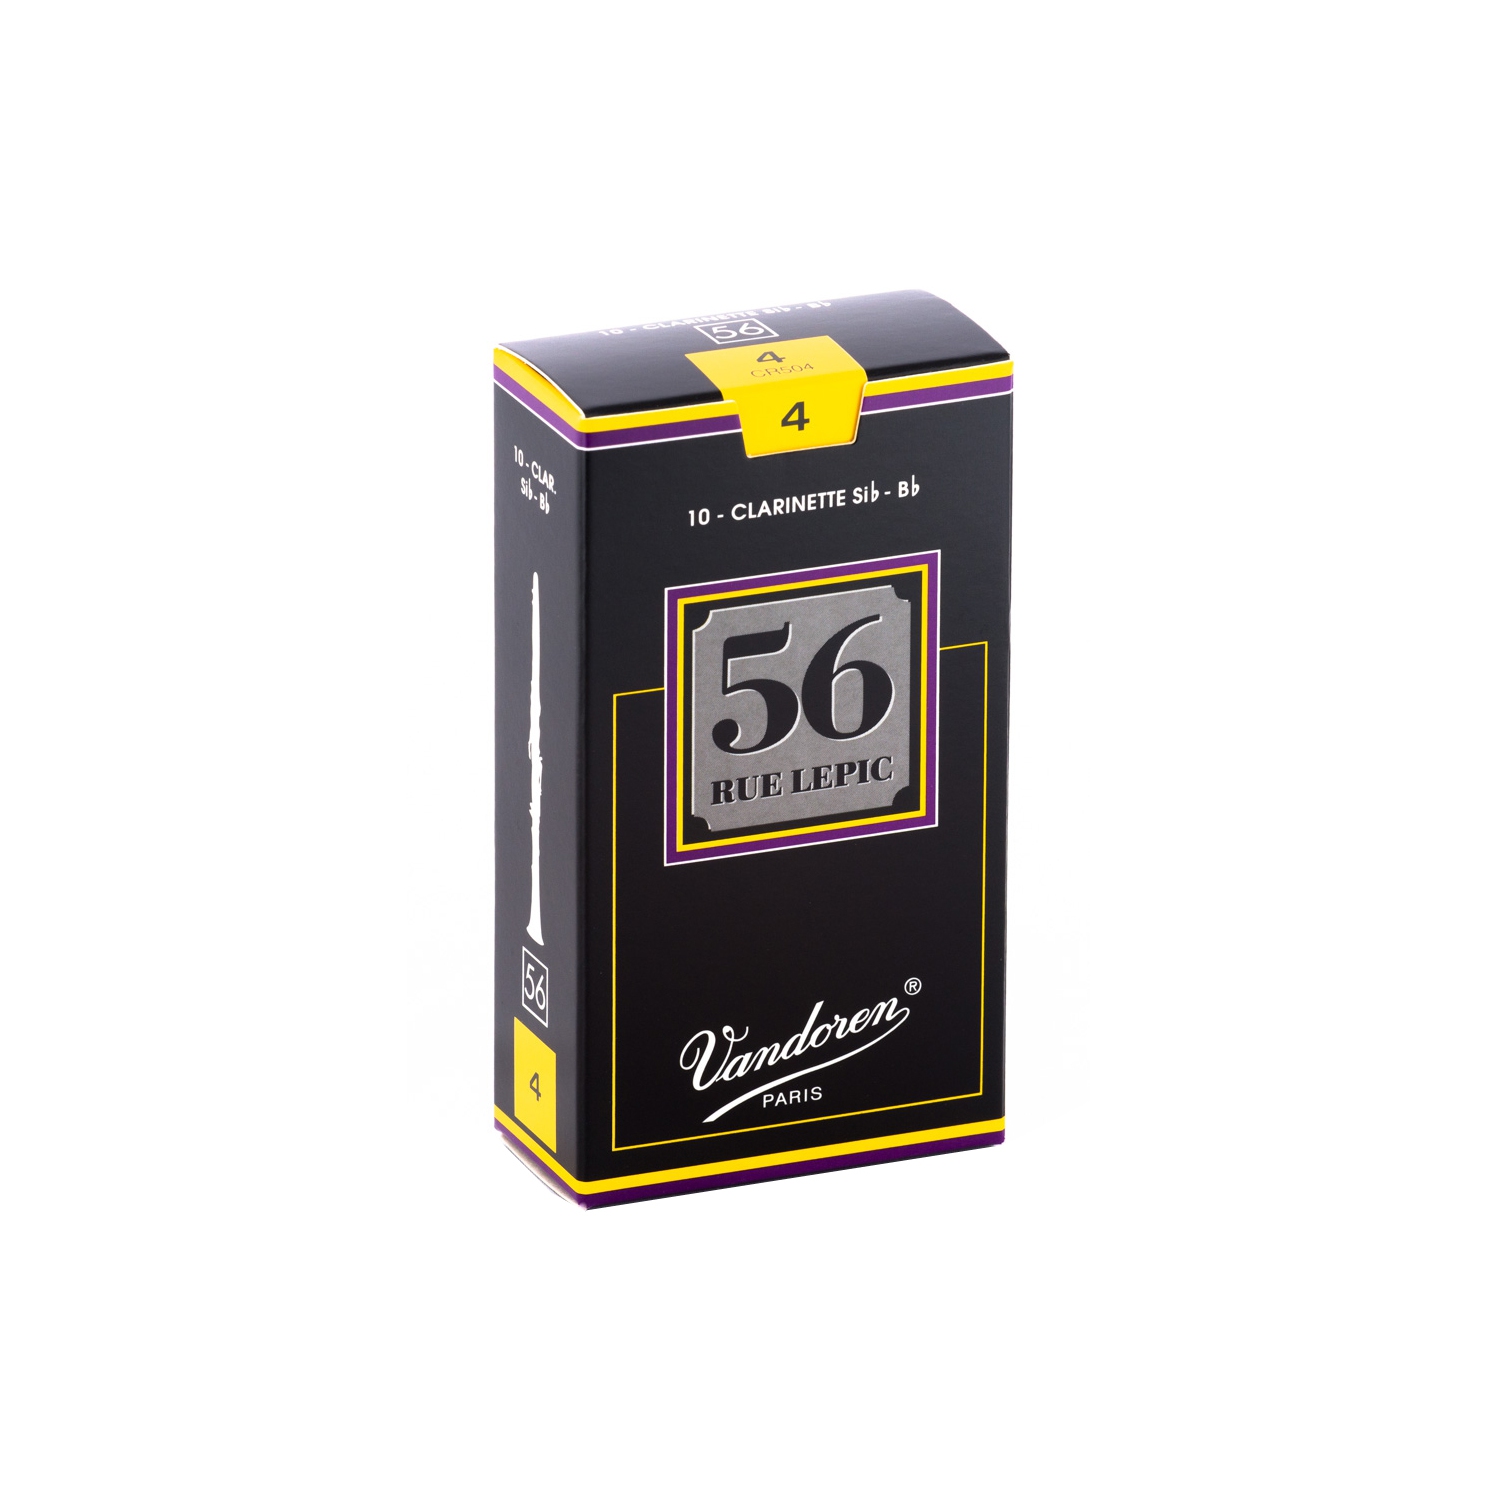 Vandoren CR504 Bb Clarinet 56 Rue Lepic Reeds Strength 4; Box of 10 